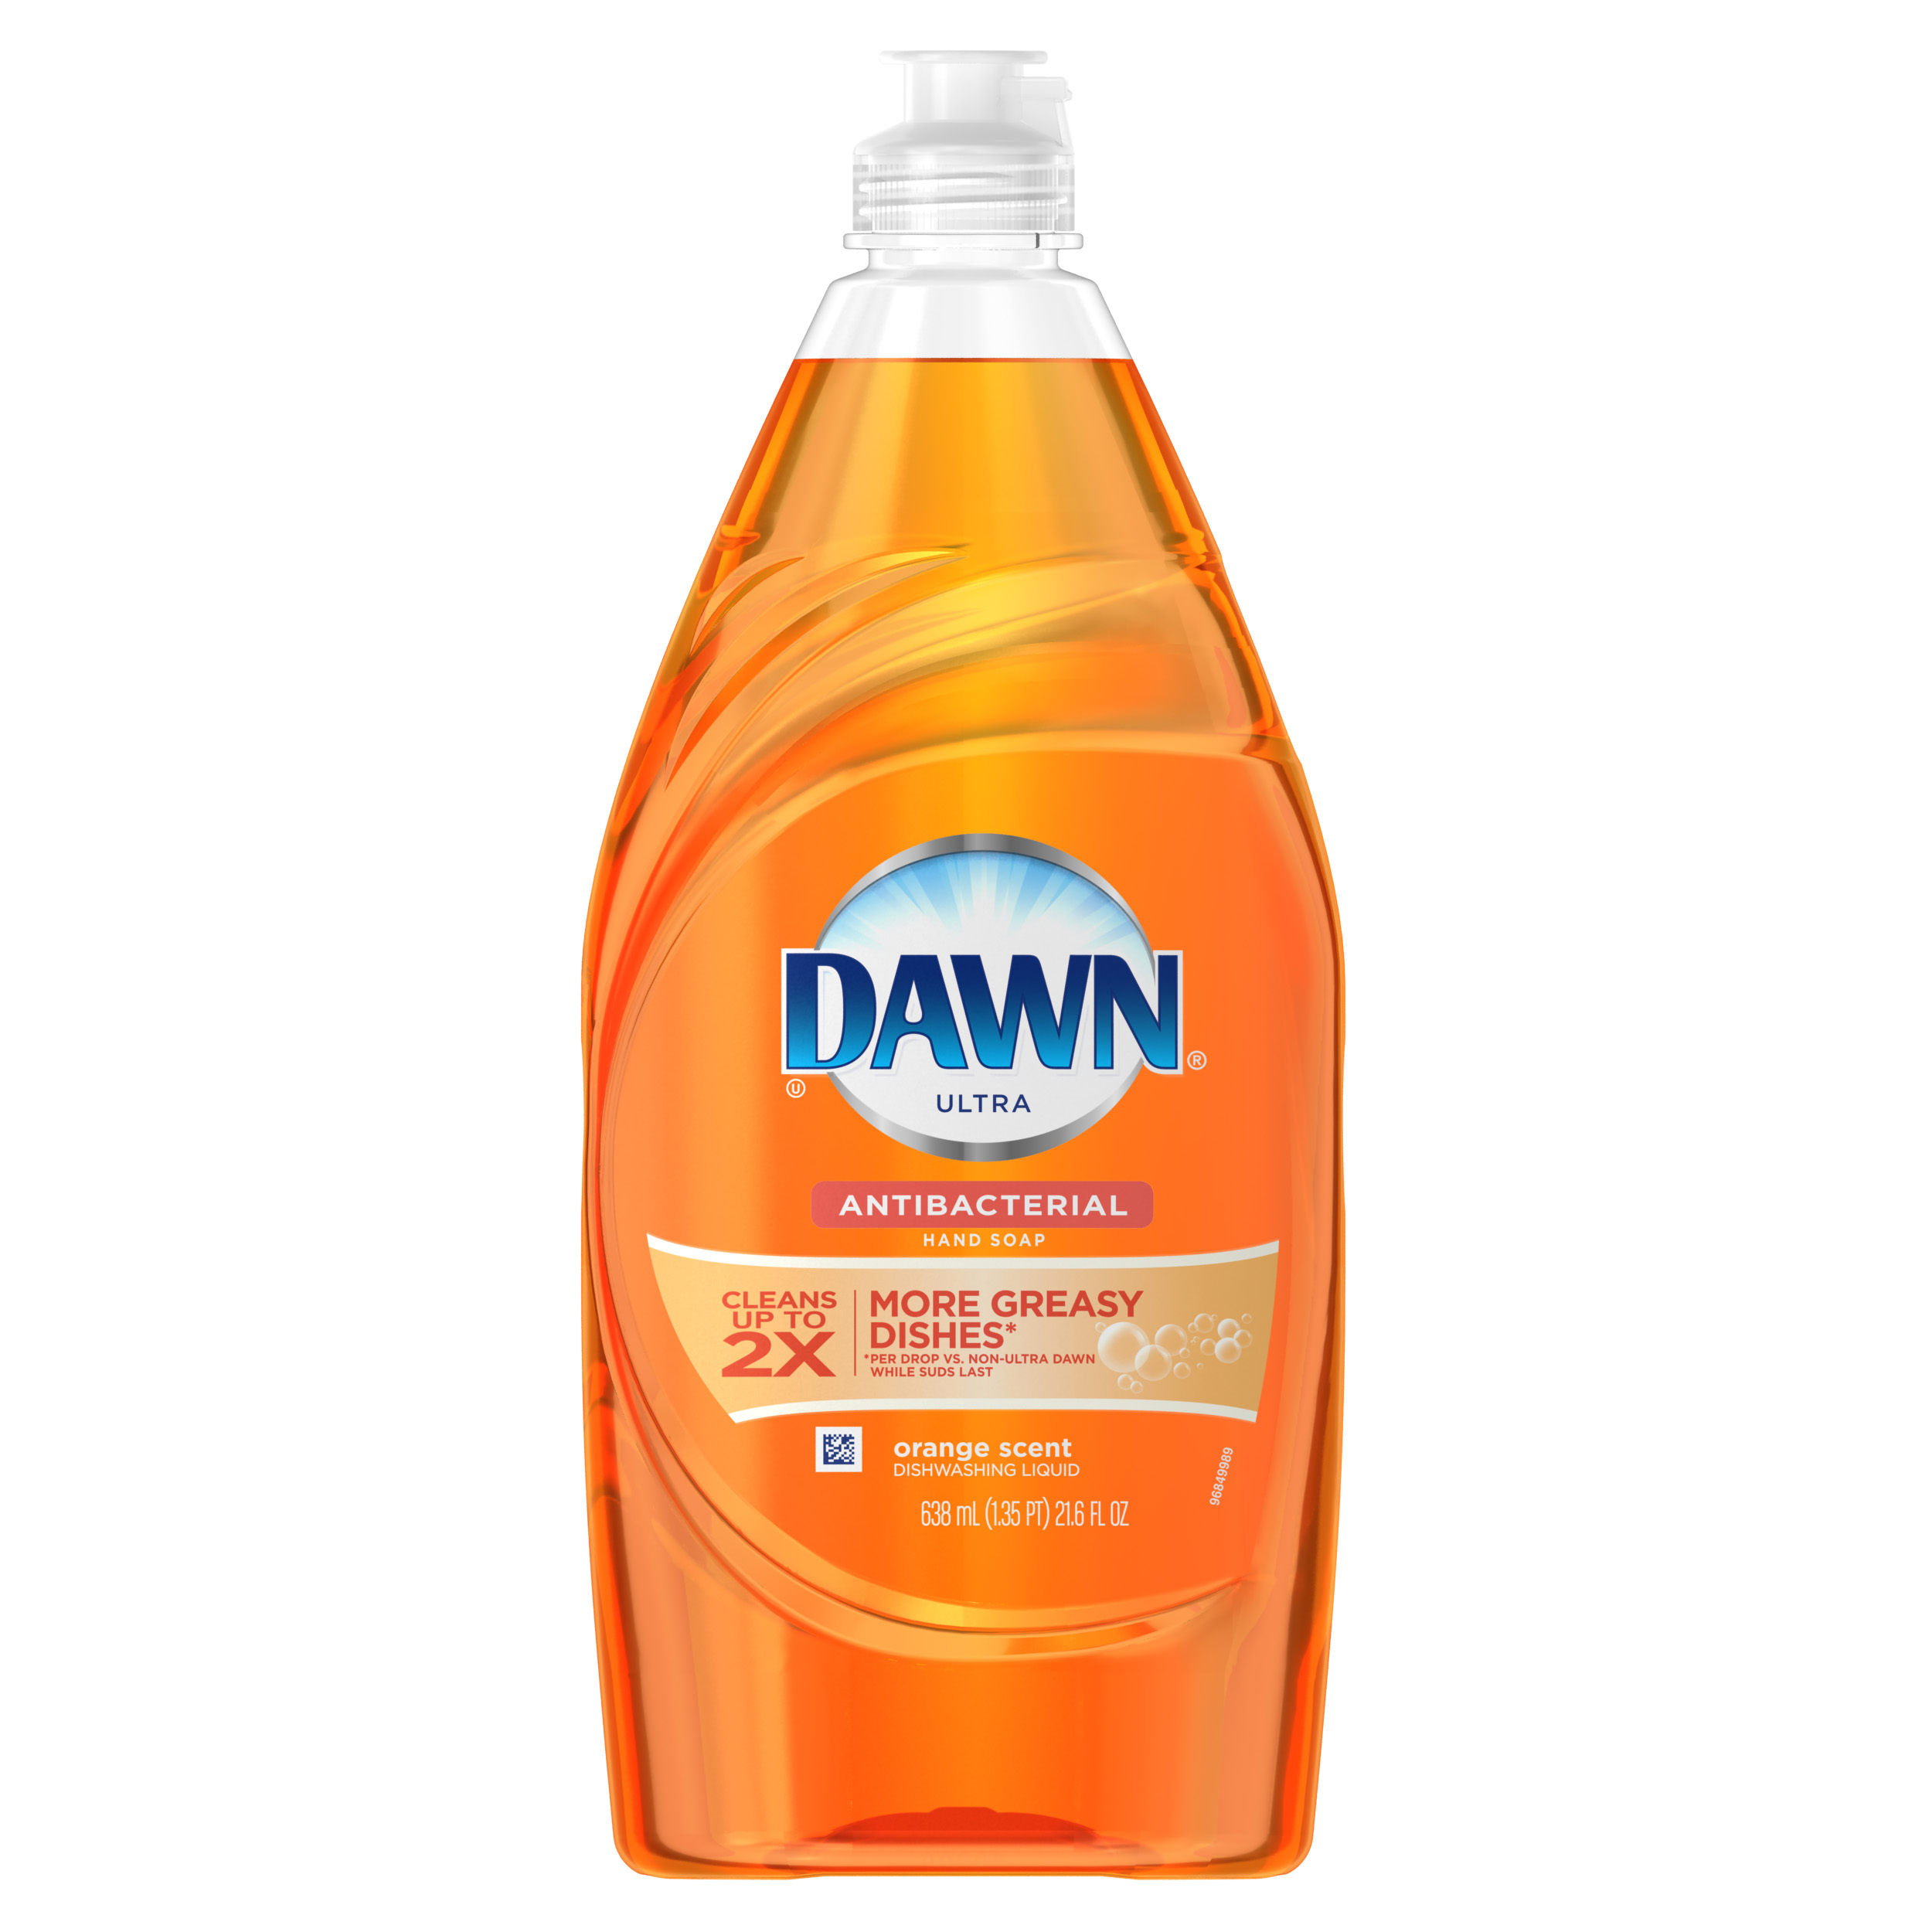 Dawn Ultra Antibacterial Dishwashing Liquid, Orange, 21.6 fl oz - image 1 of 8